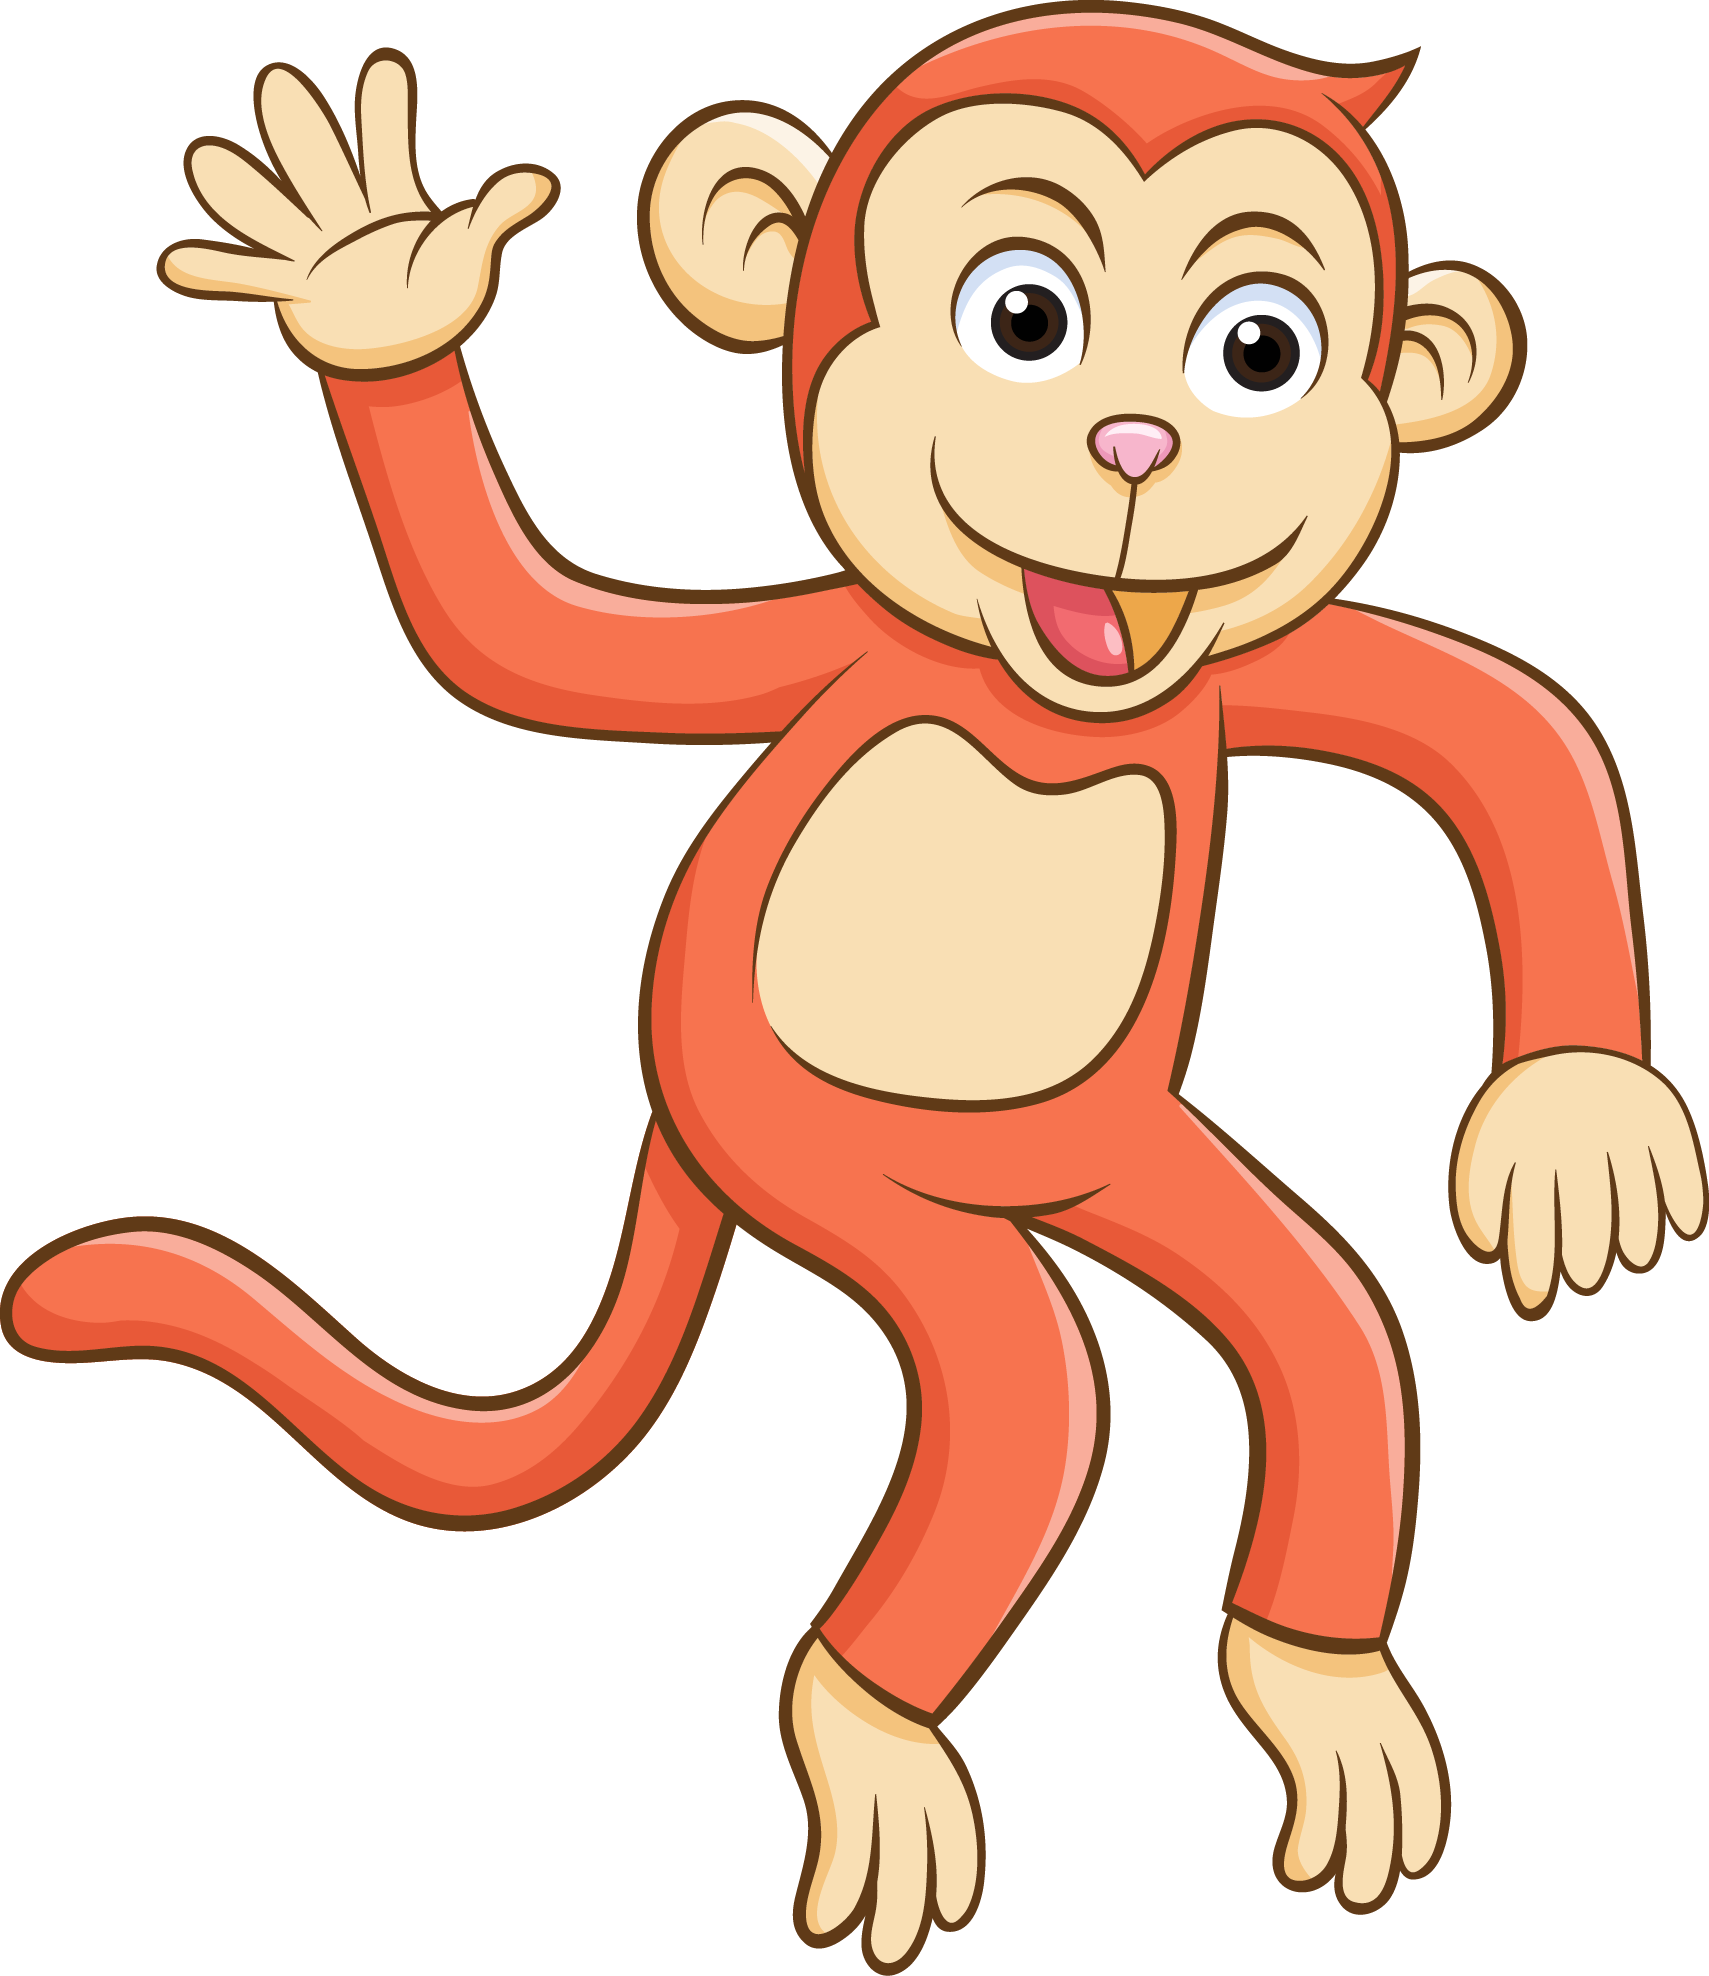 Monkey Ape Cartoon Clip Art - Monkey Ape Cartoon Clip Art (1709x1976)